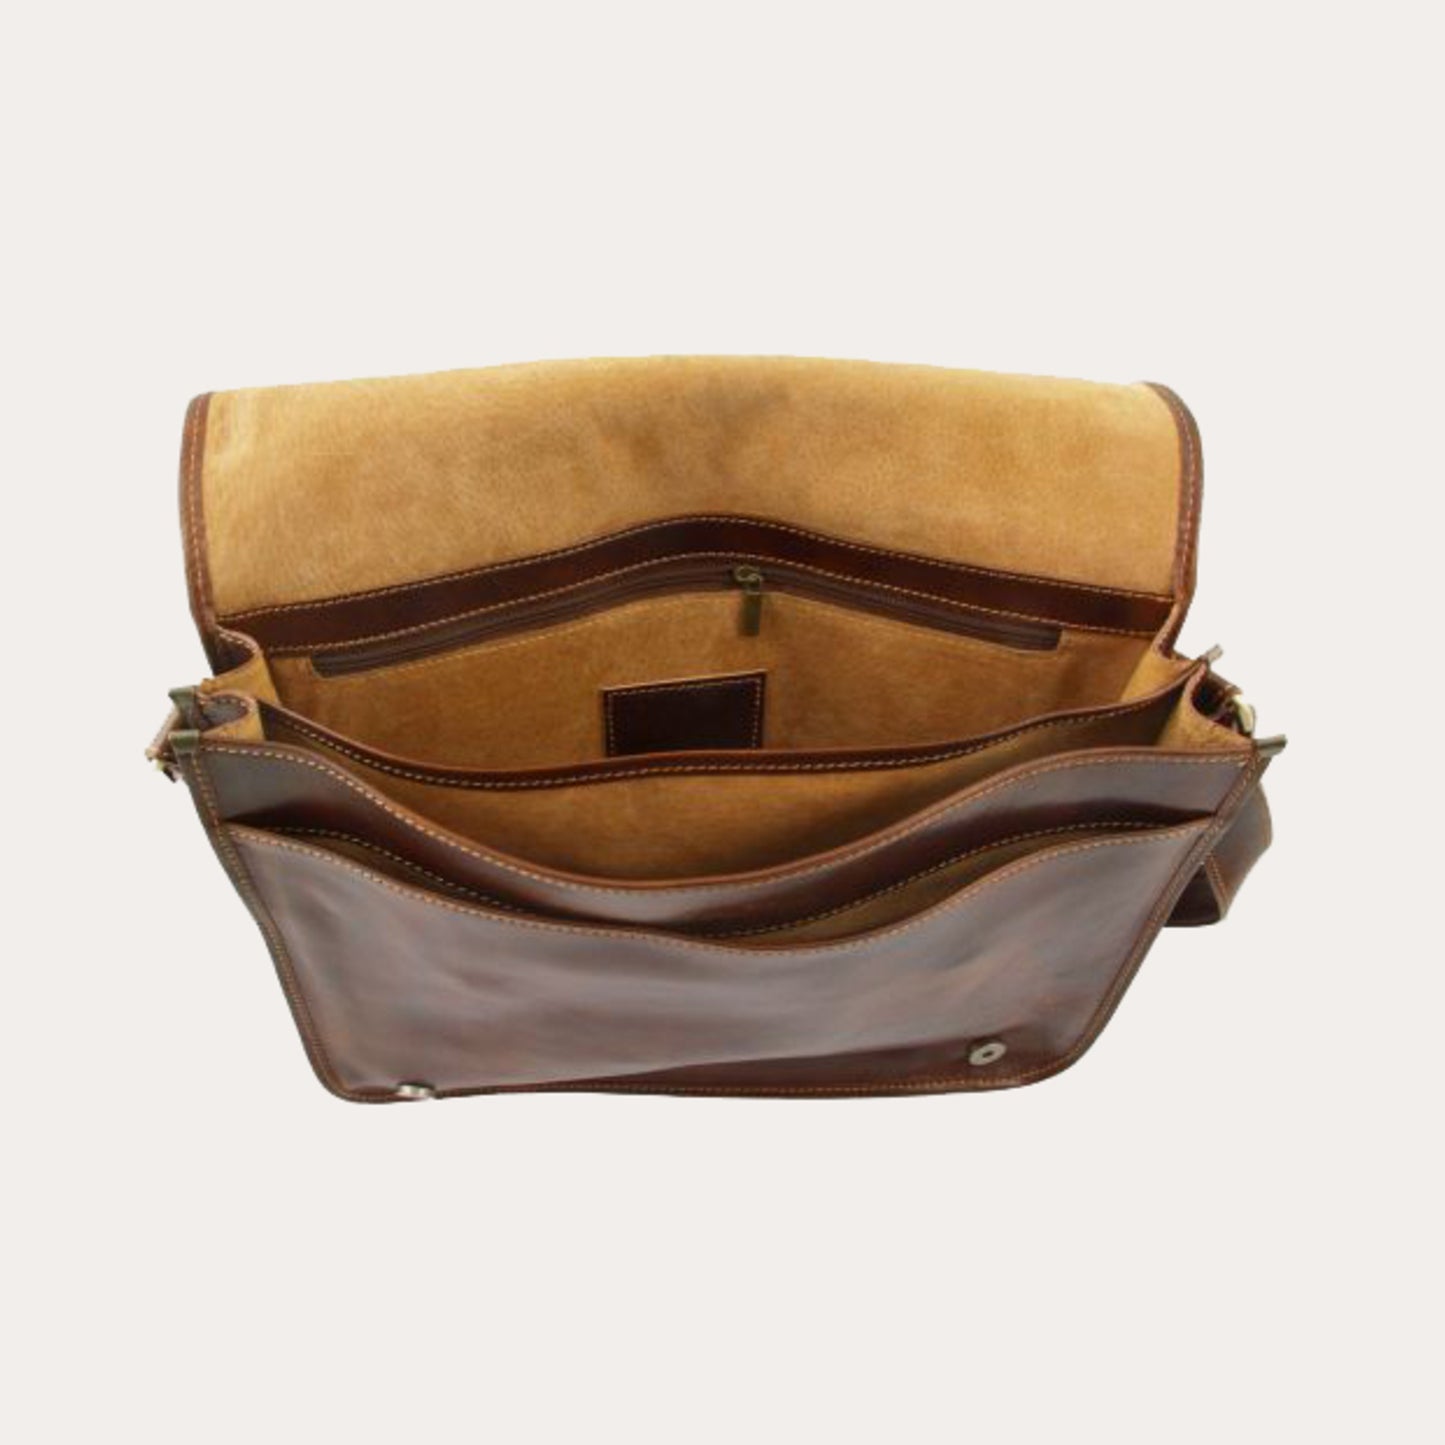 Tuscany Leather Brown Leather Messenger Bag